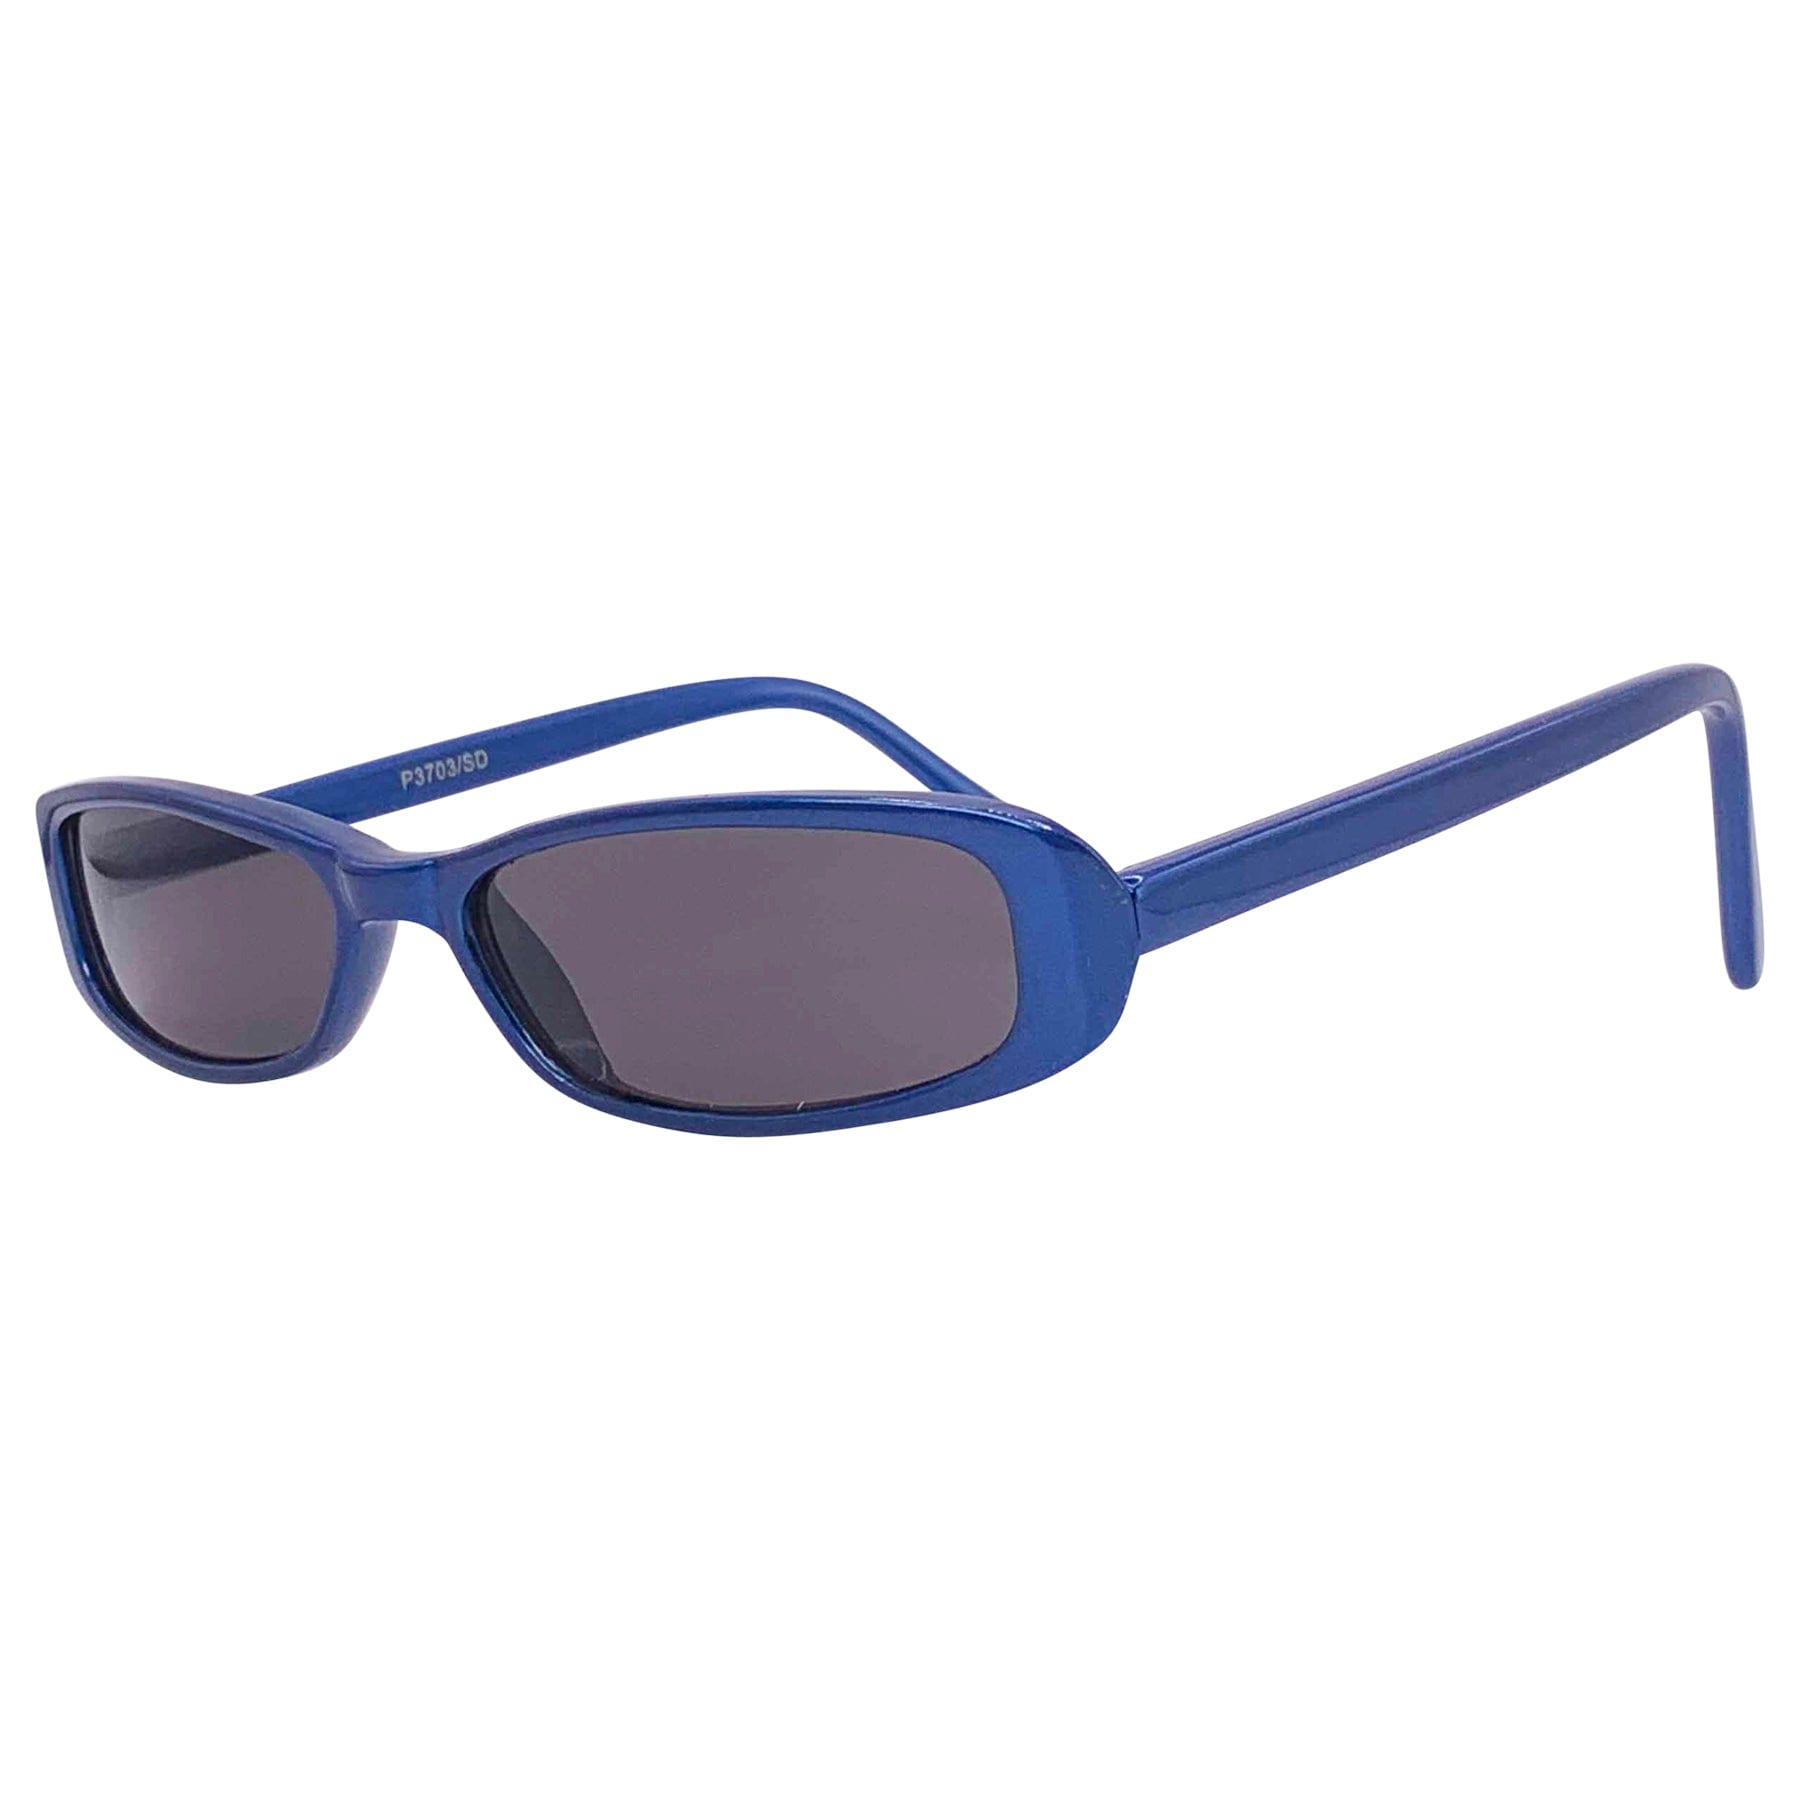 blue small vintage sunglasses women